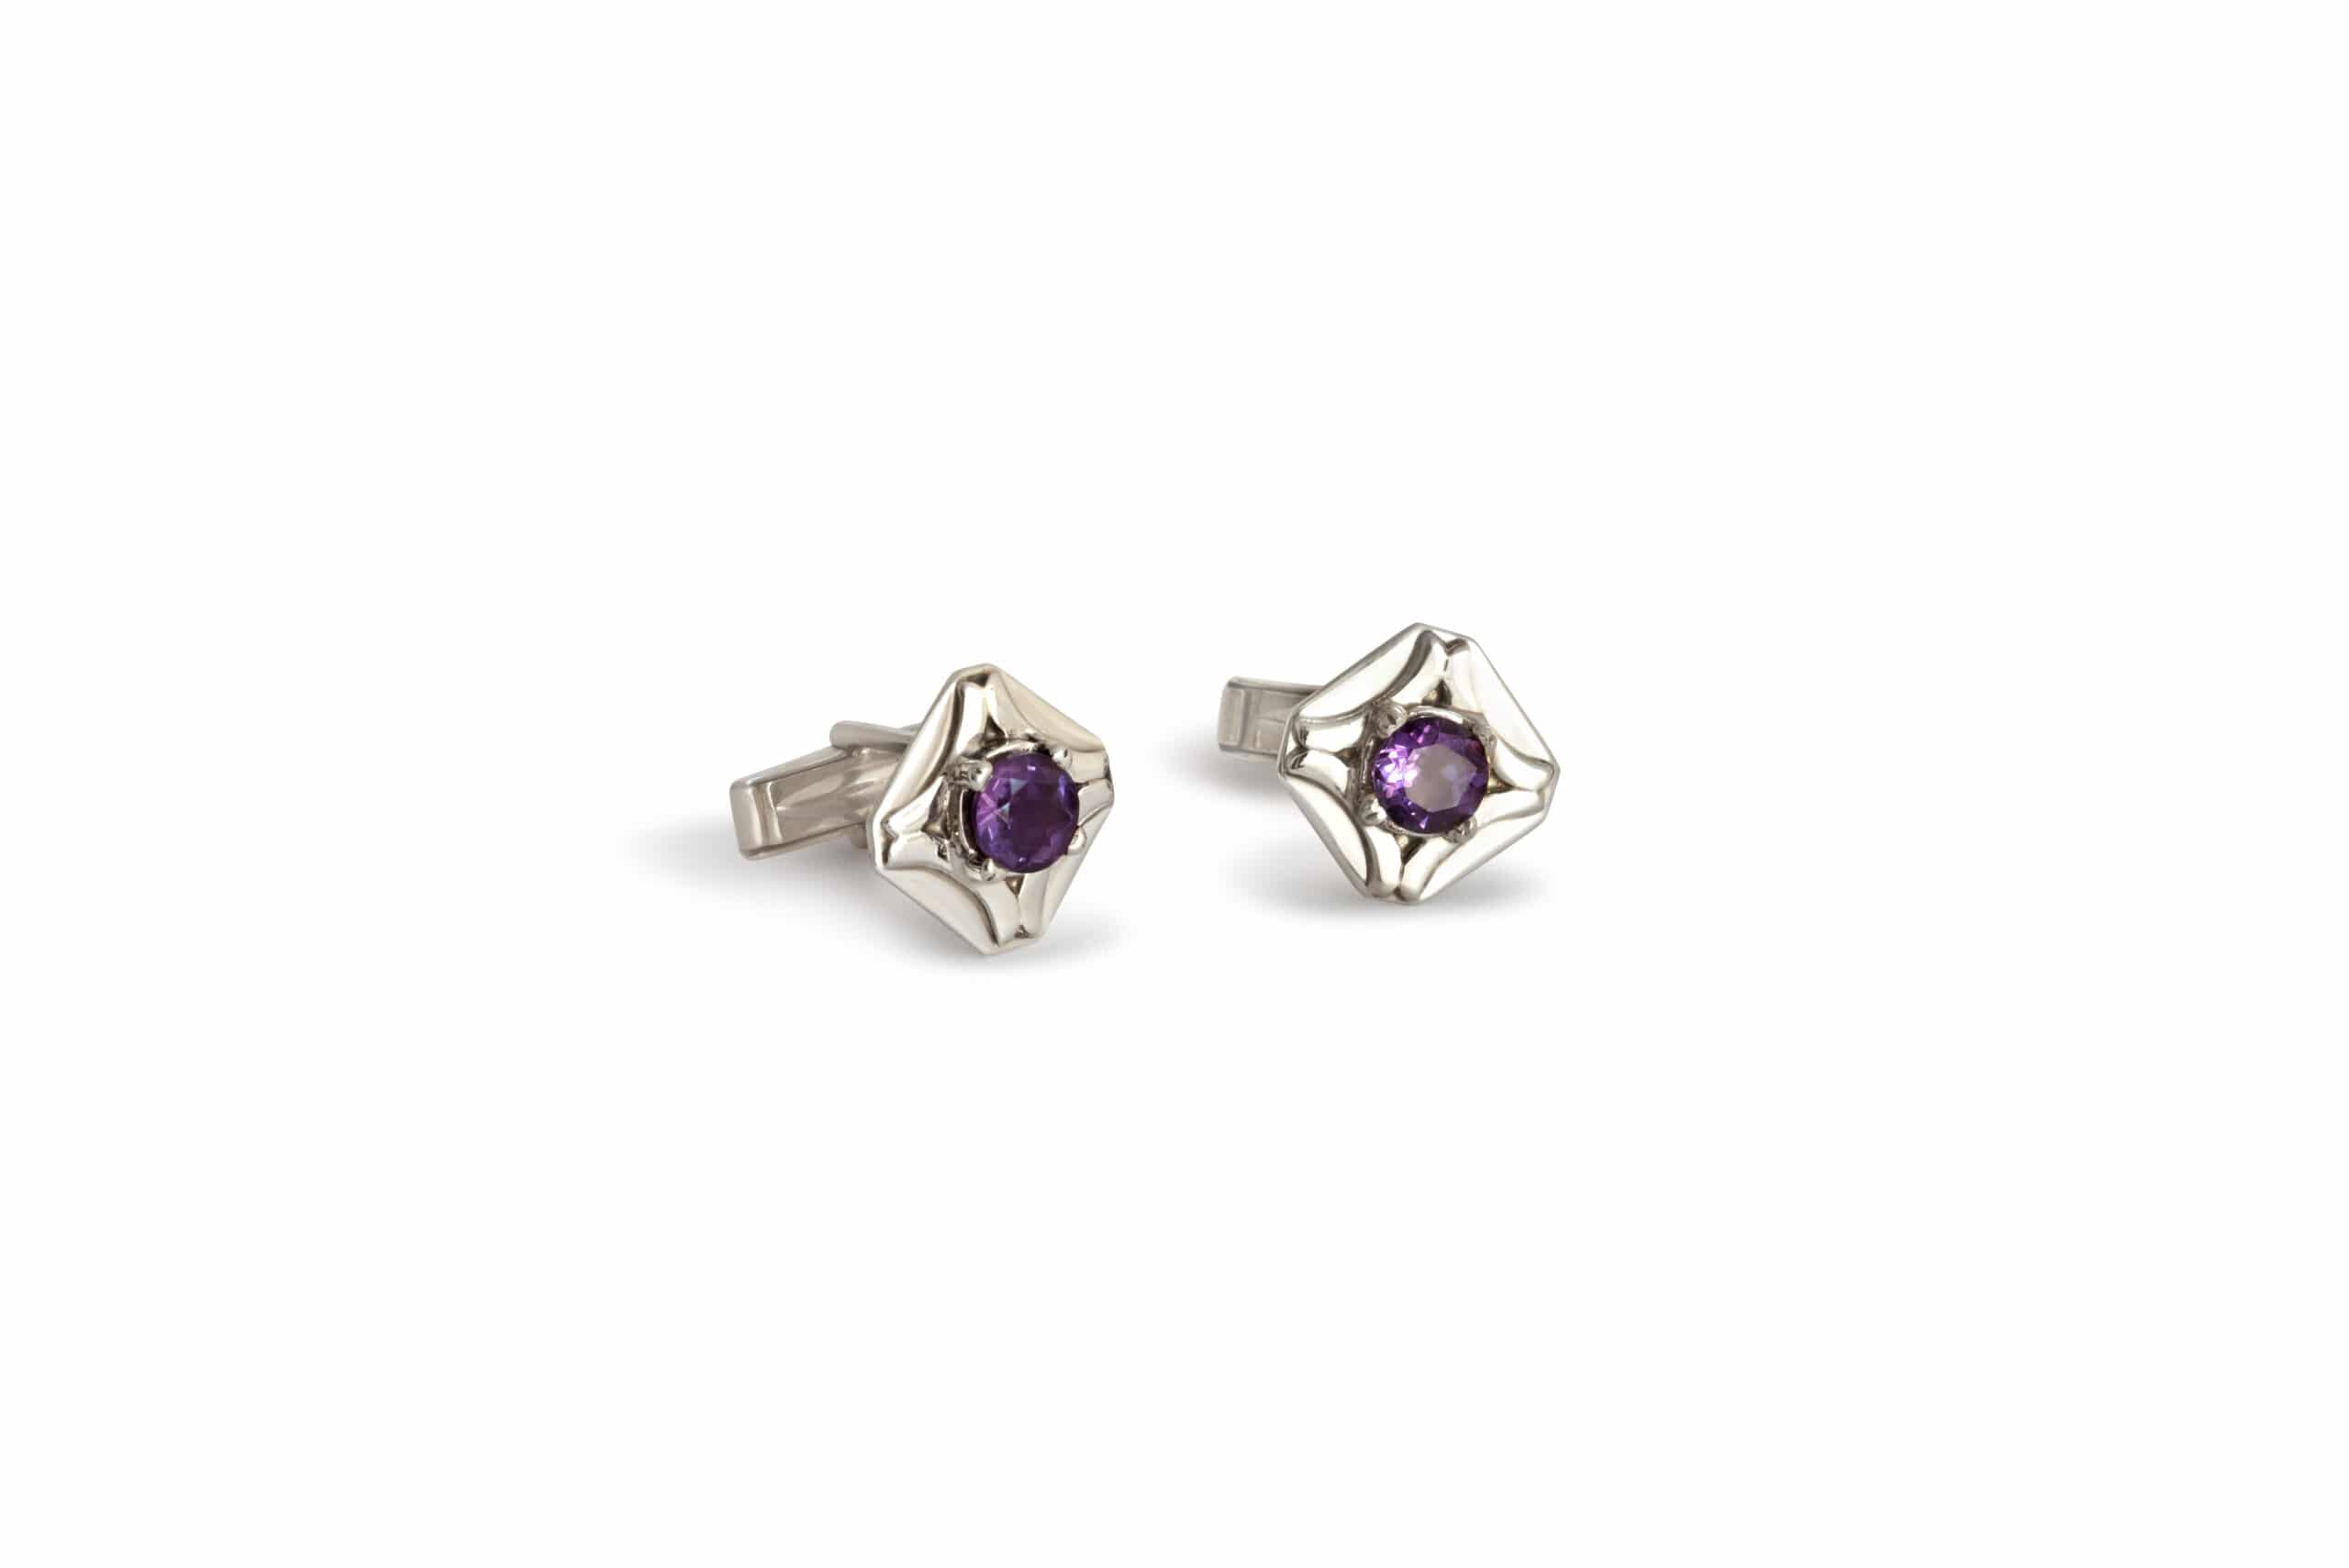 Silver Cufflinks With Purple Amethyst Stones